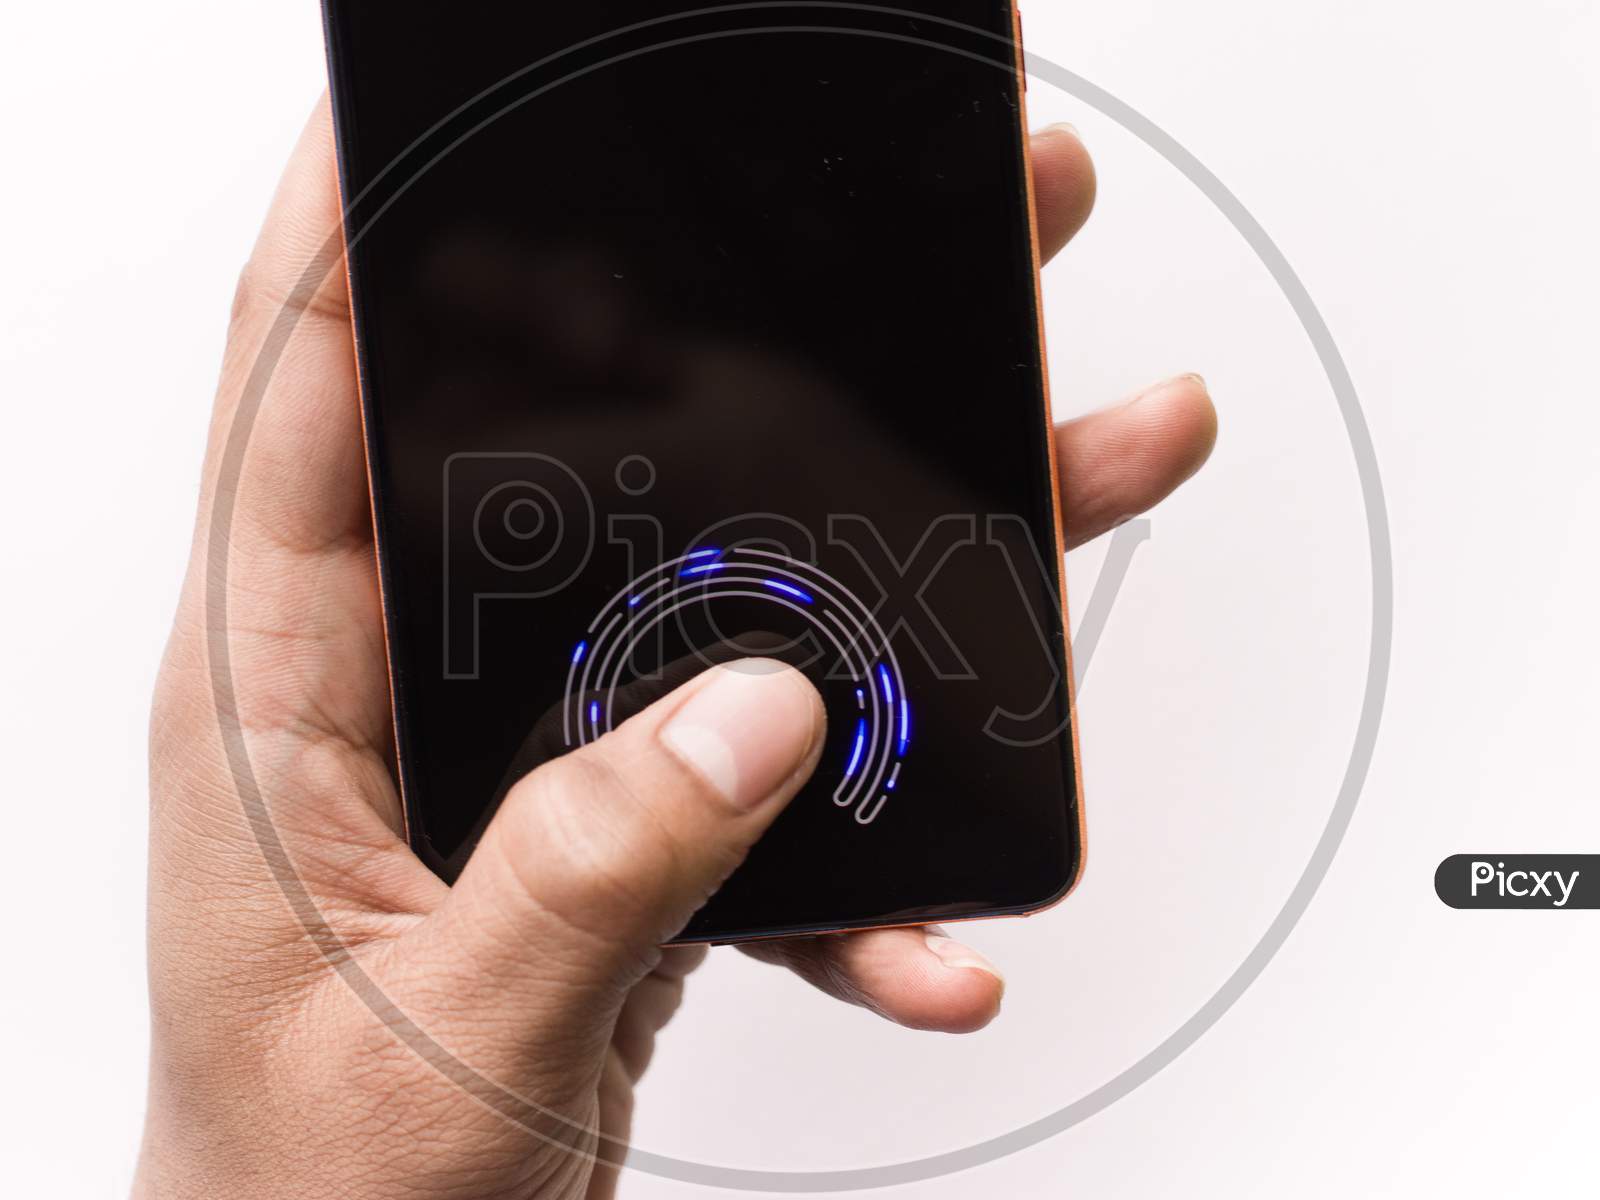 In-display fingerprint sensor of new phone stock image shot on dibrugarh assam india - 26 february 2020.